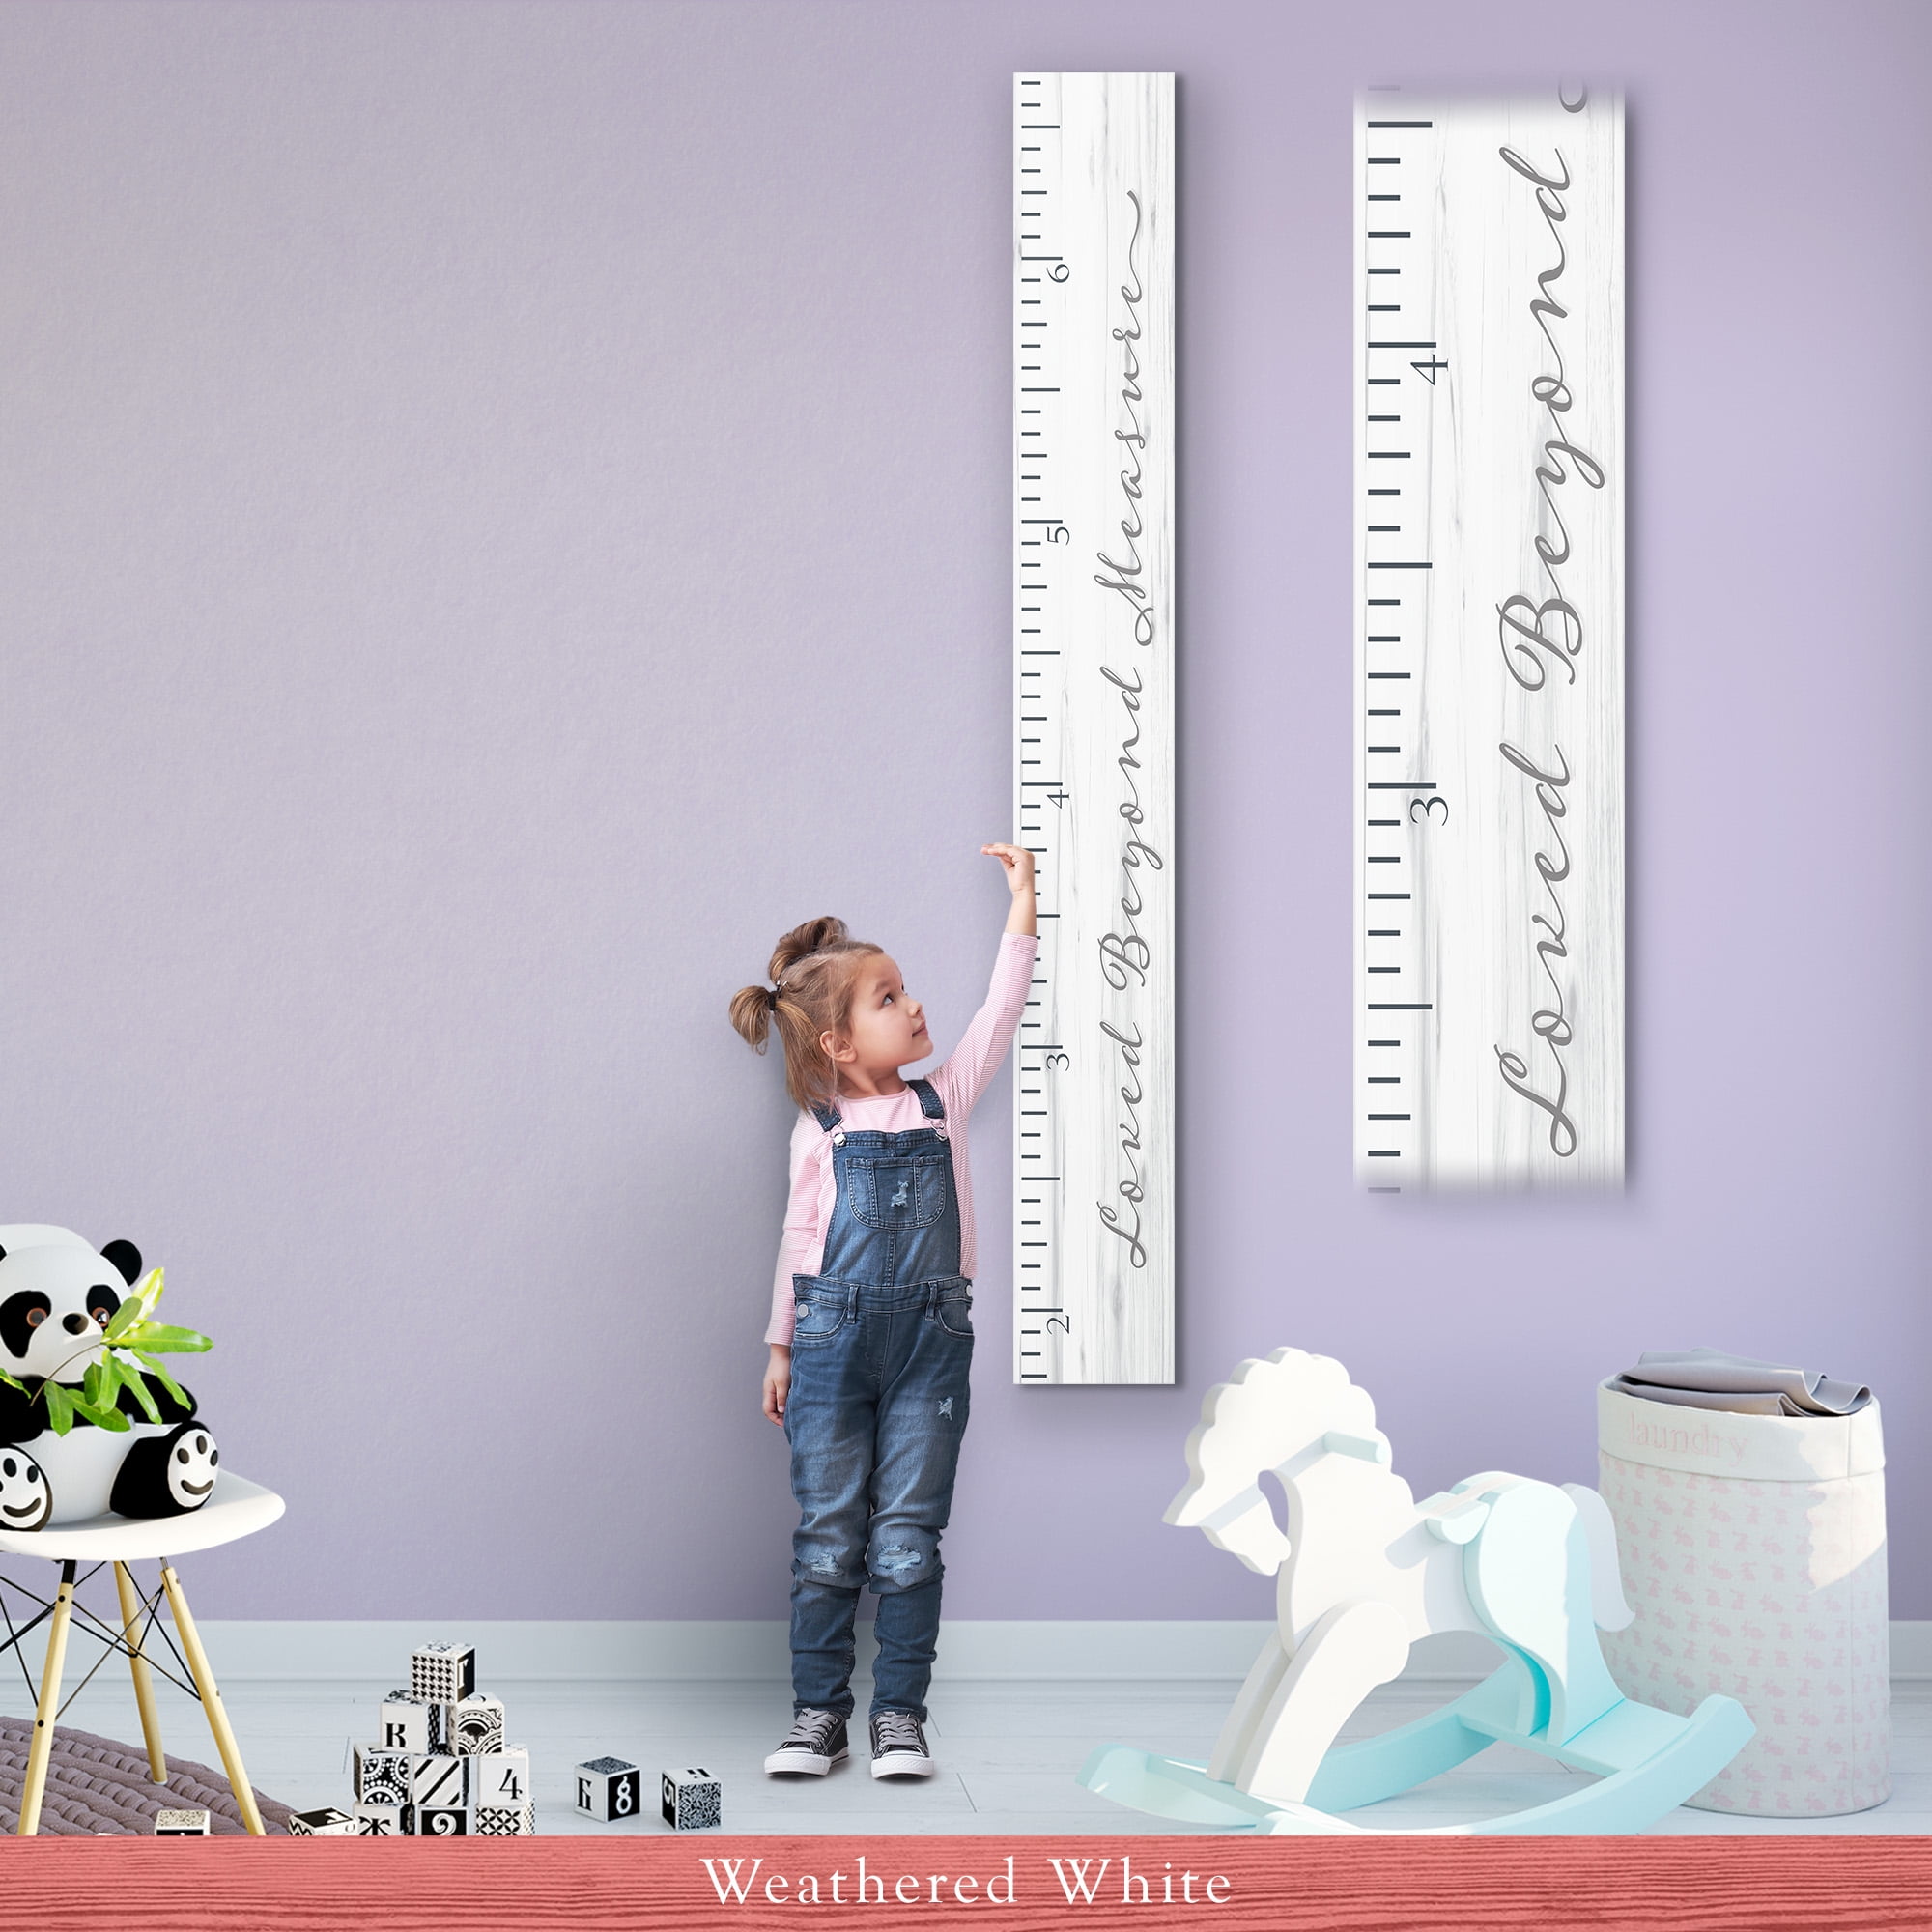 8 Wall Sticker Magical Rainbow Unicorn Custom Measuring Height Growth Chart 